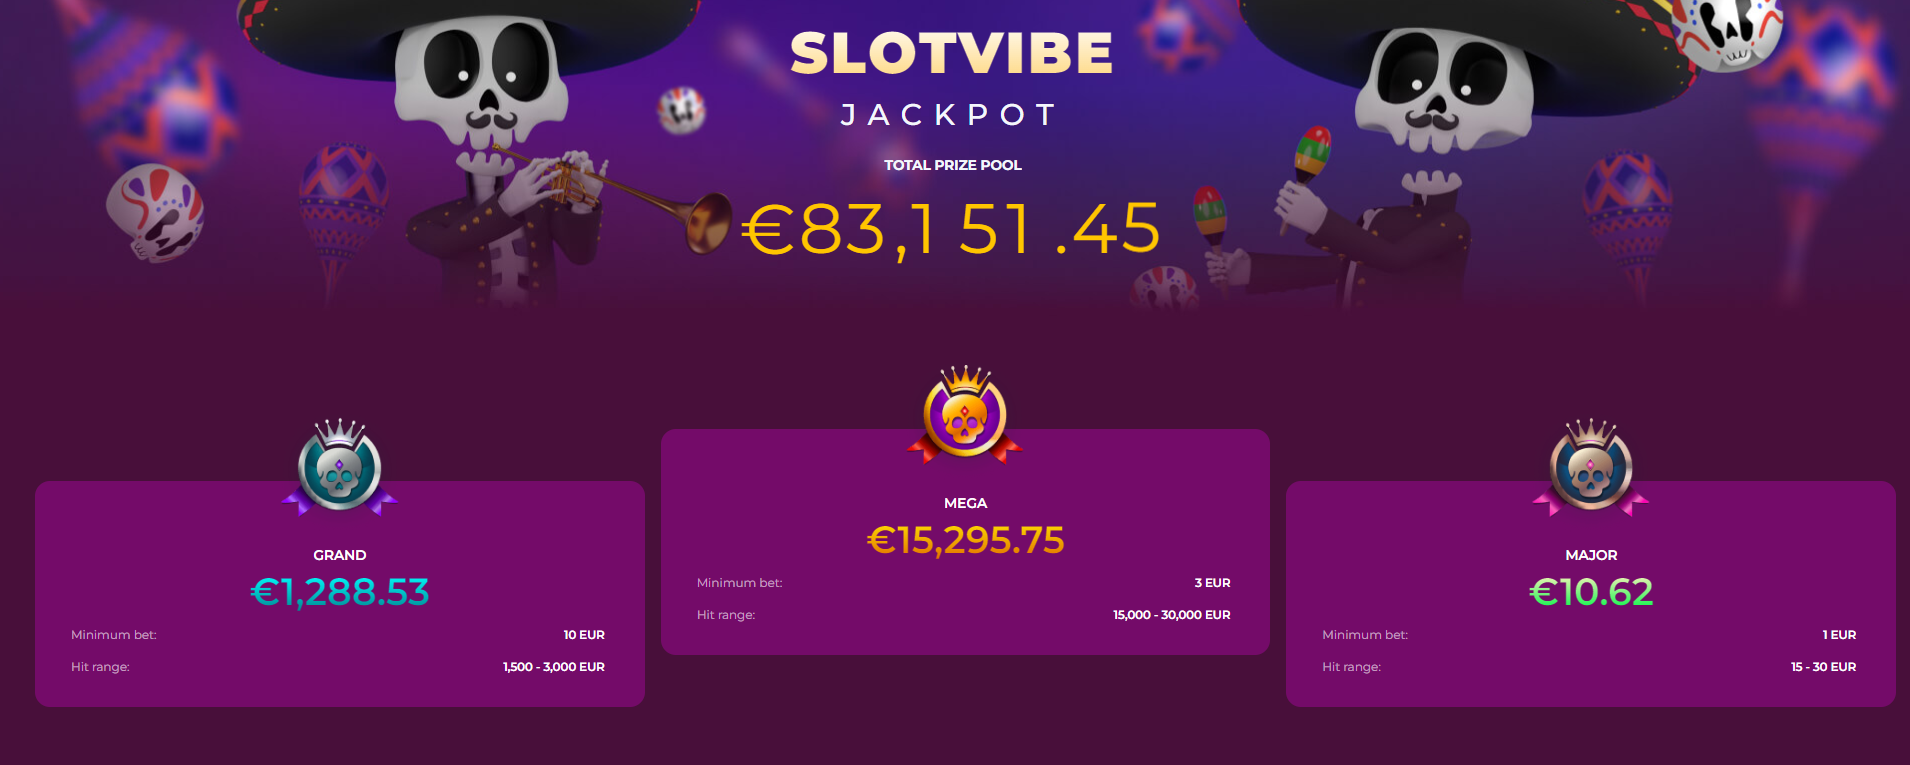 SlotVibe_Jackpot